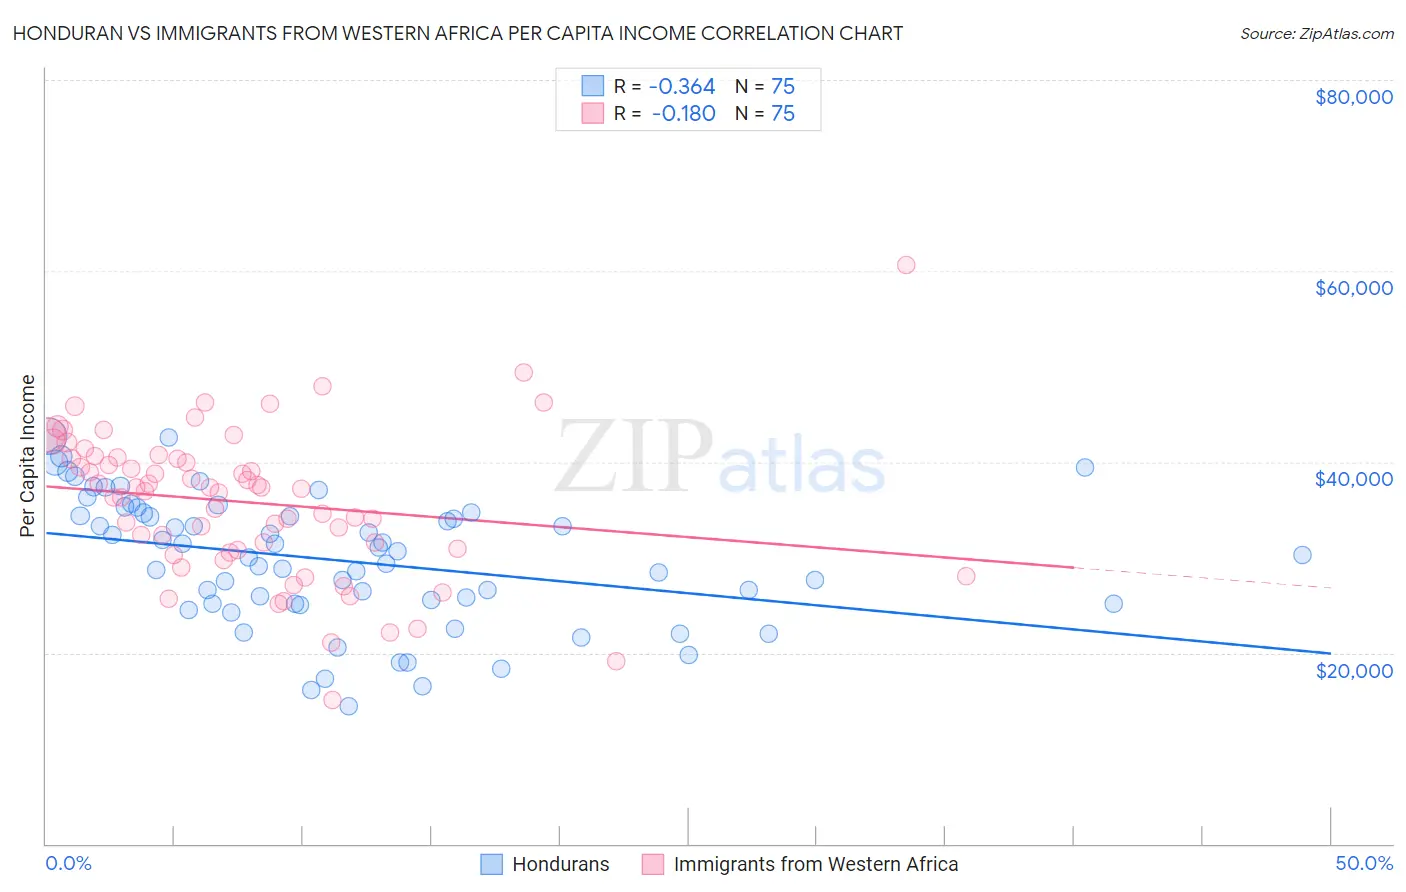 Honduran vs Immigrants from Western Africa Per Capita Income